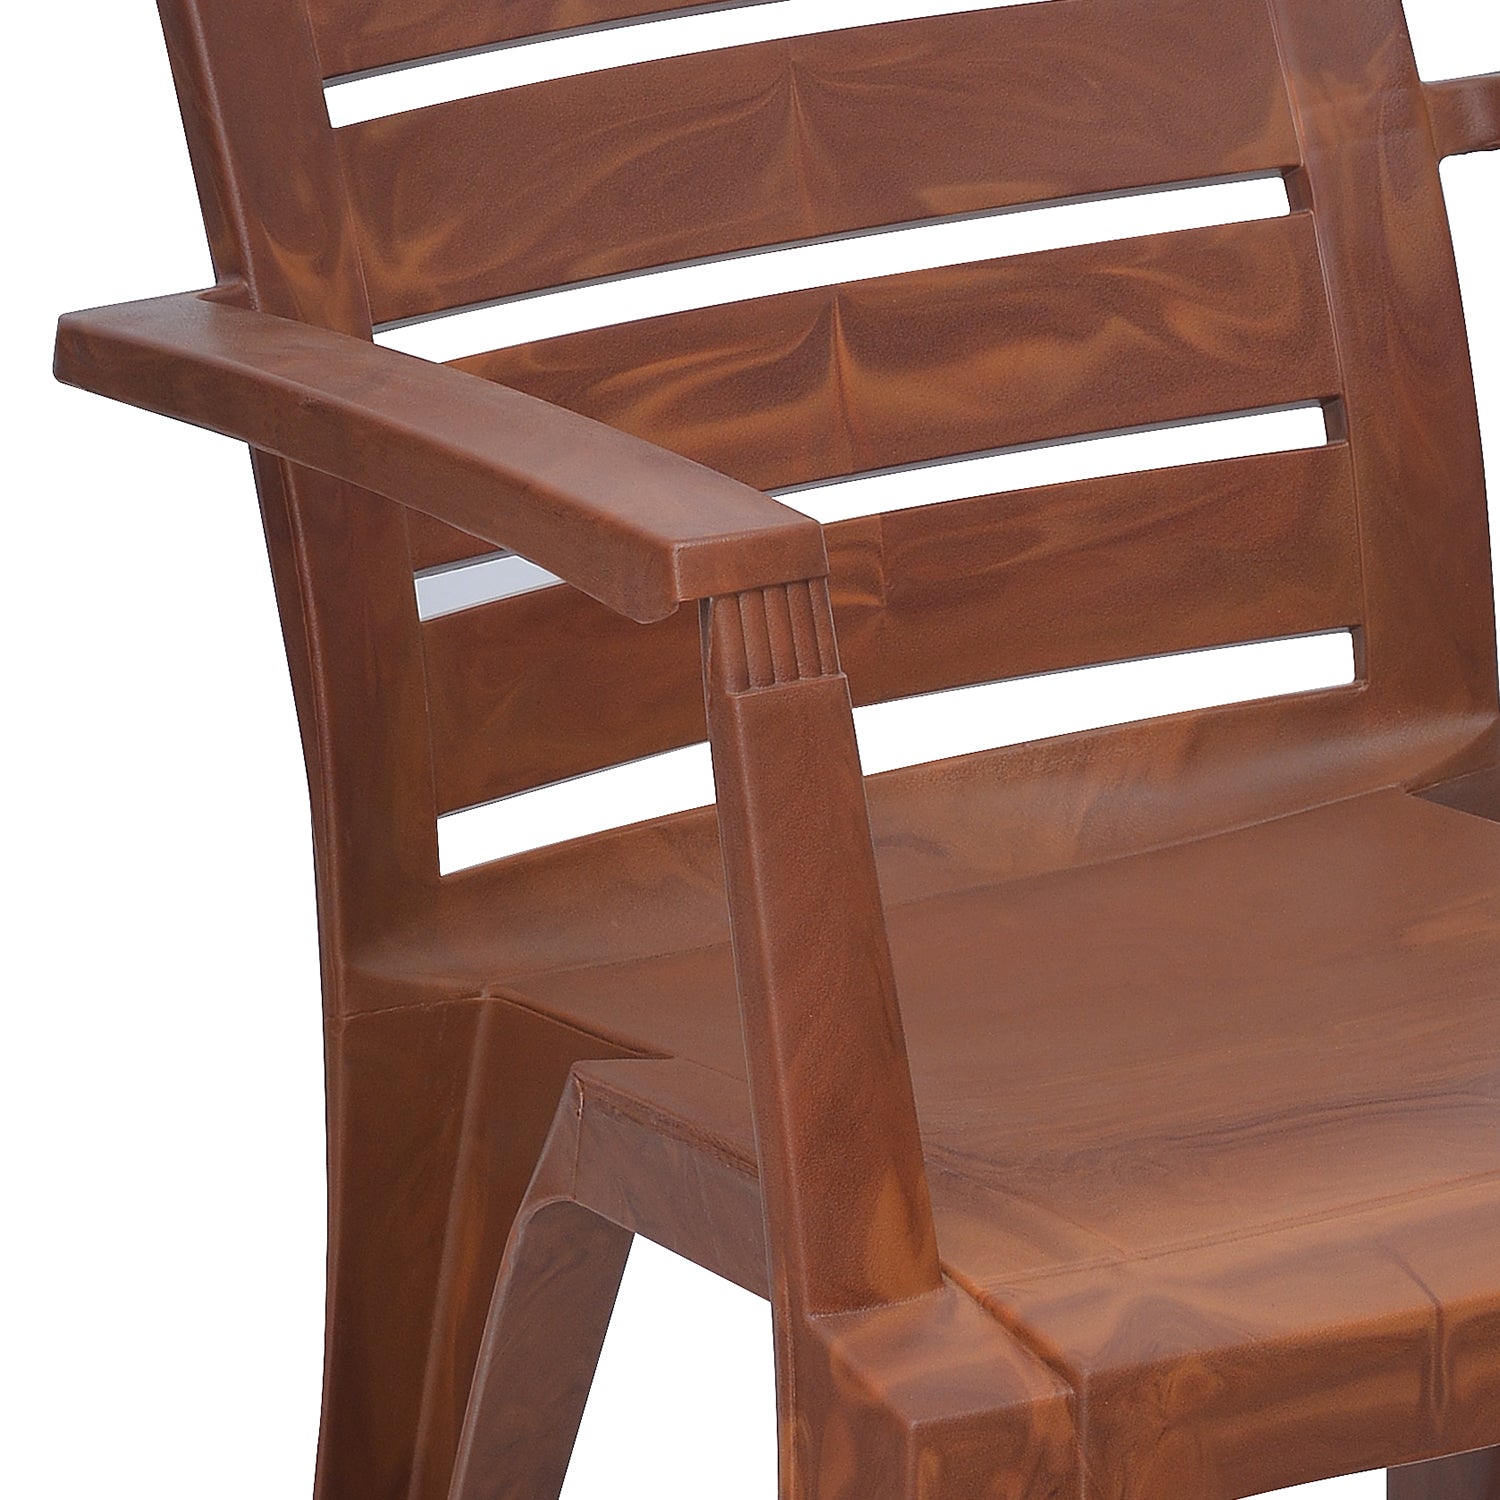 Nilkamal Passion Garden Chair Set of 4 (Mango Wood)